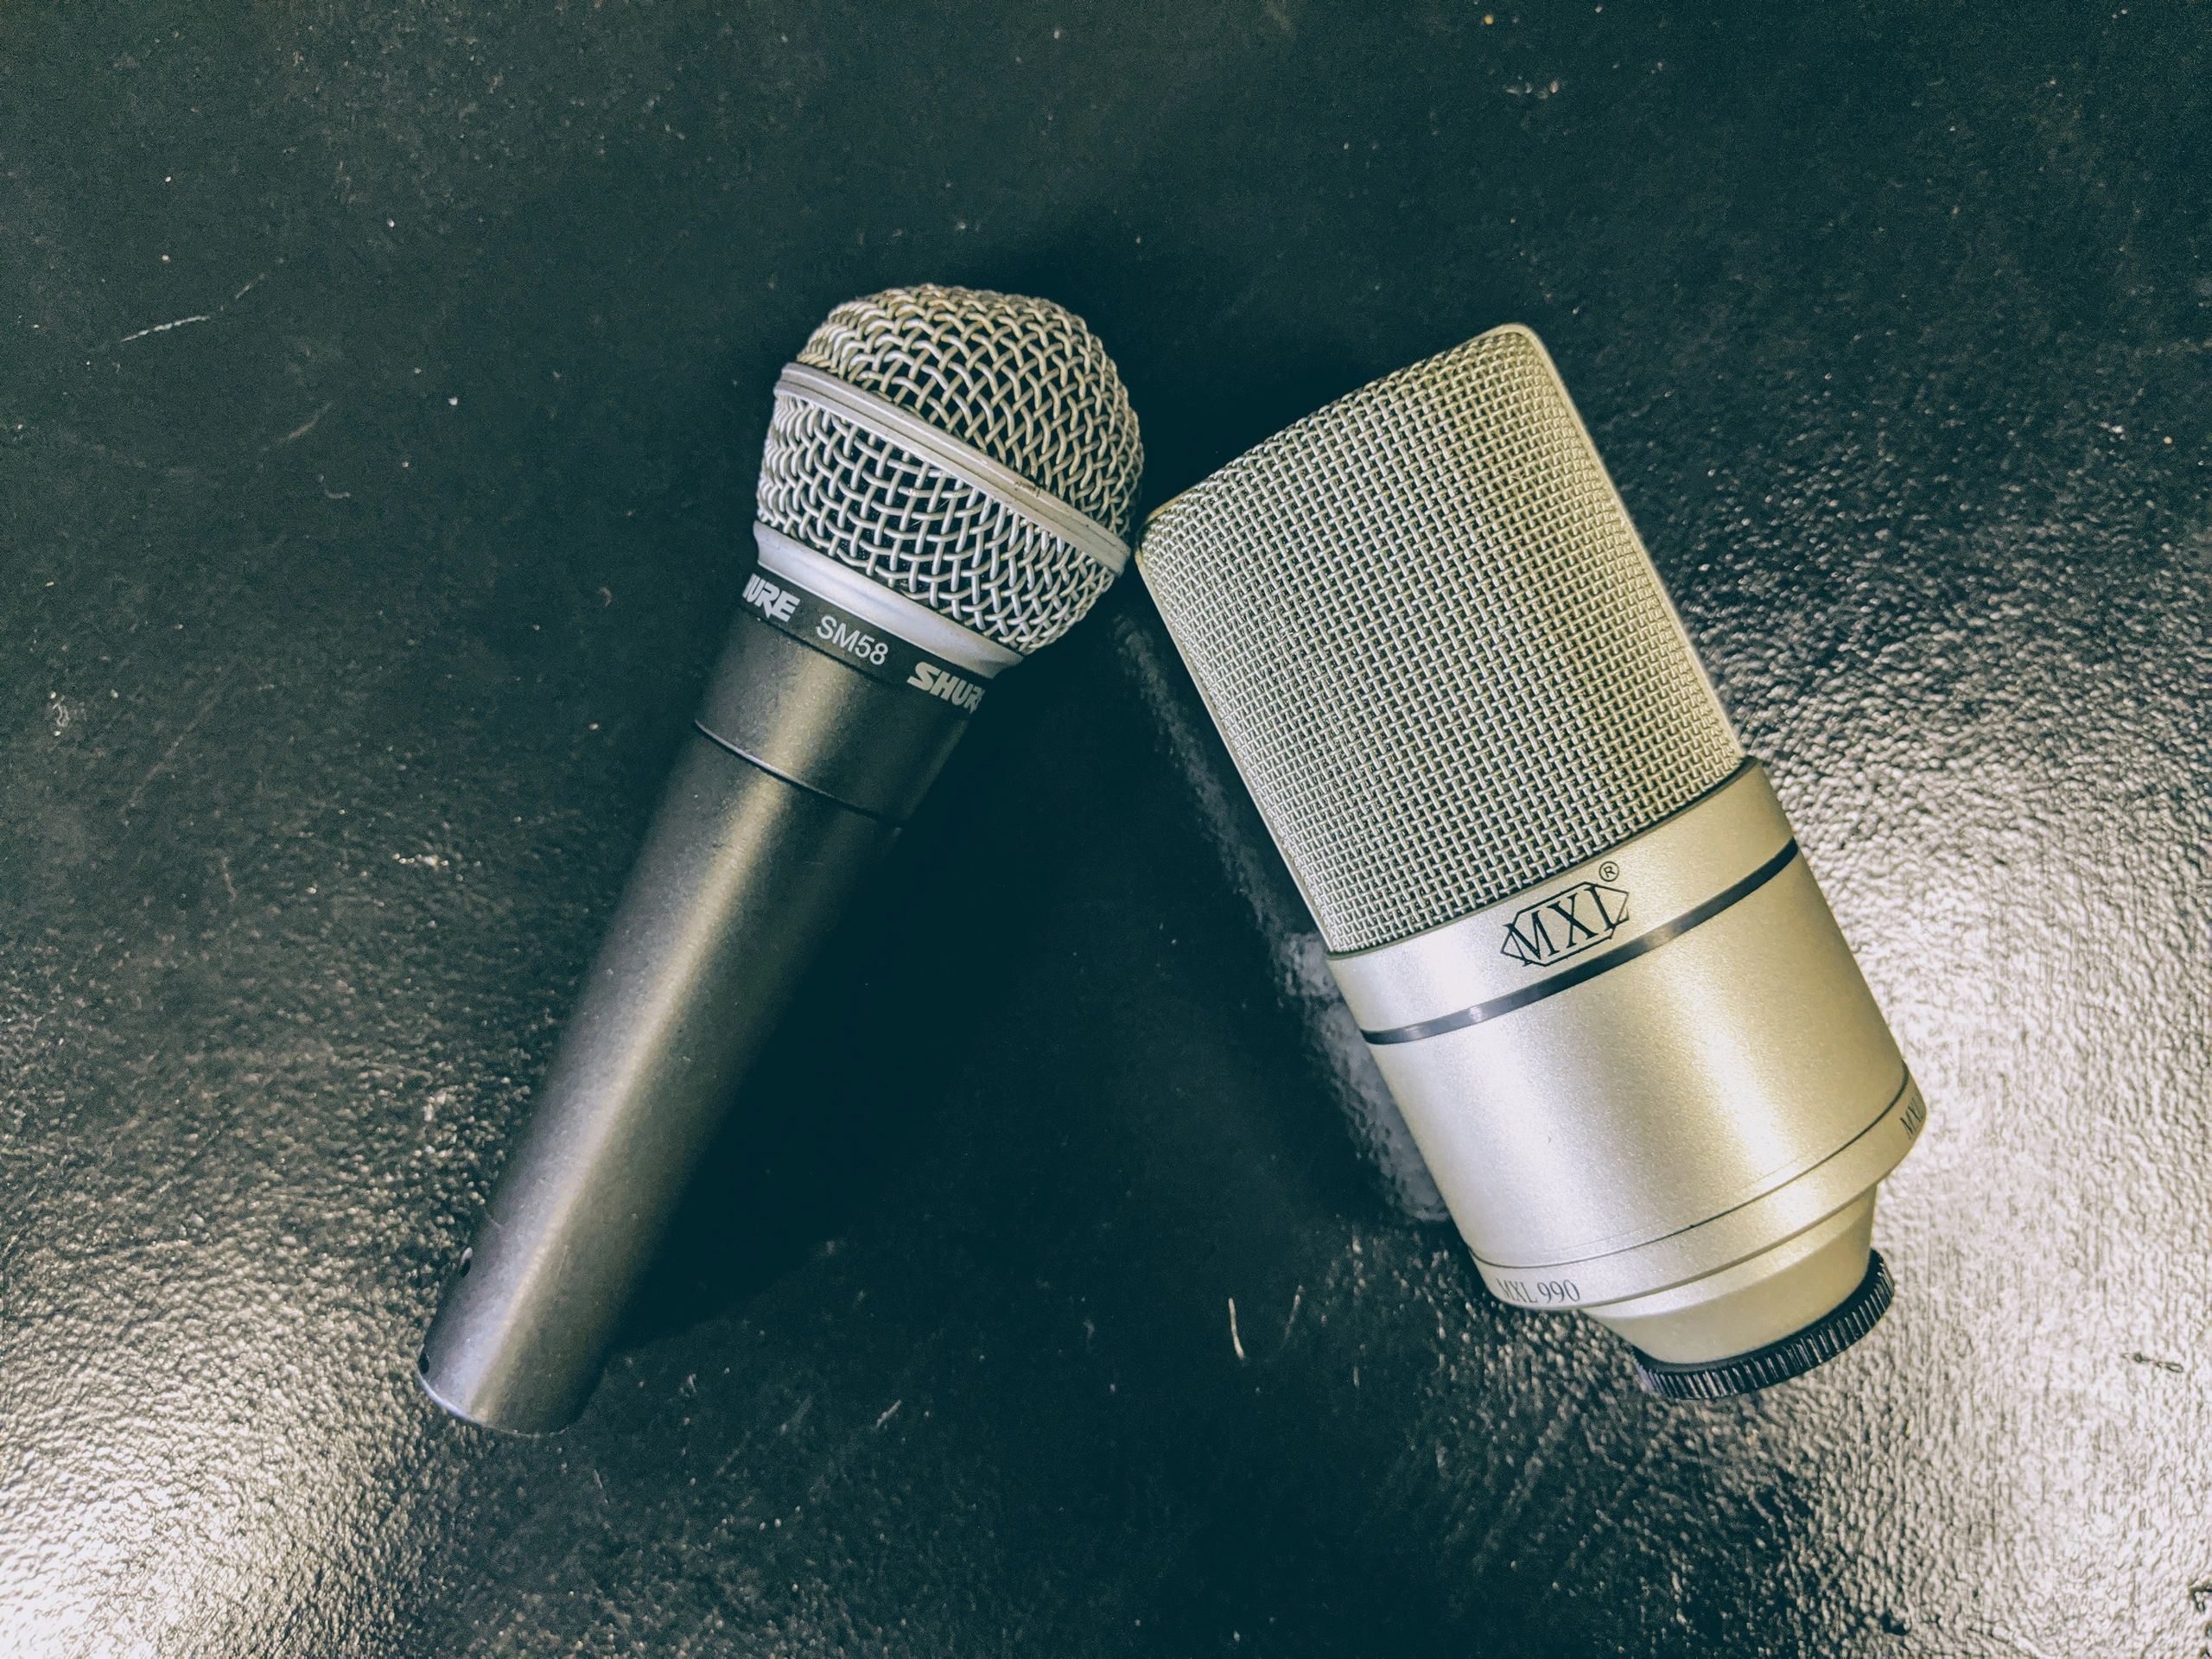 Dynamic Vs Condenser Microphones for Podcasting